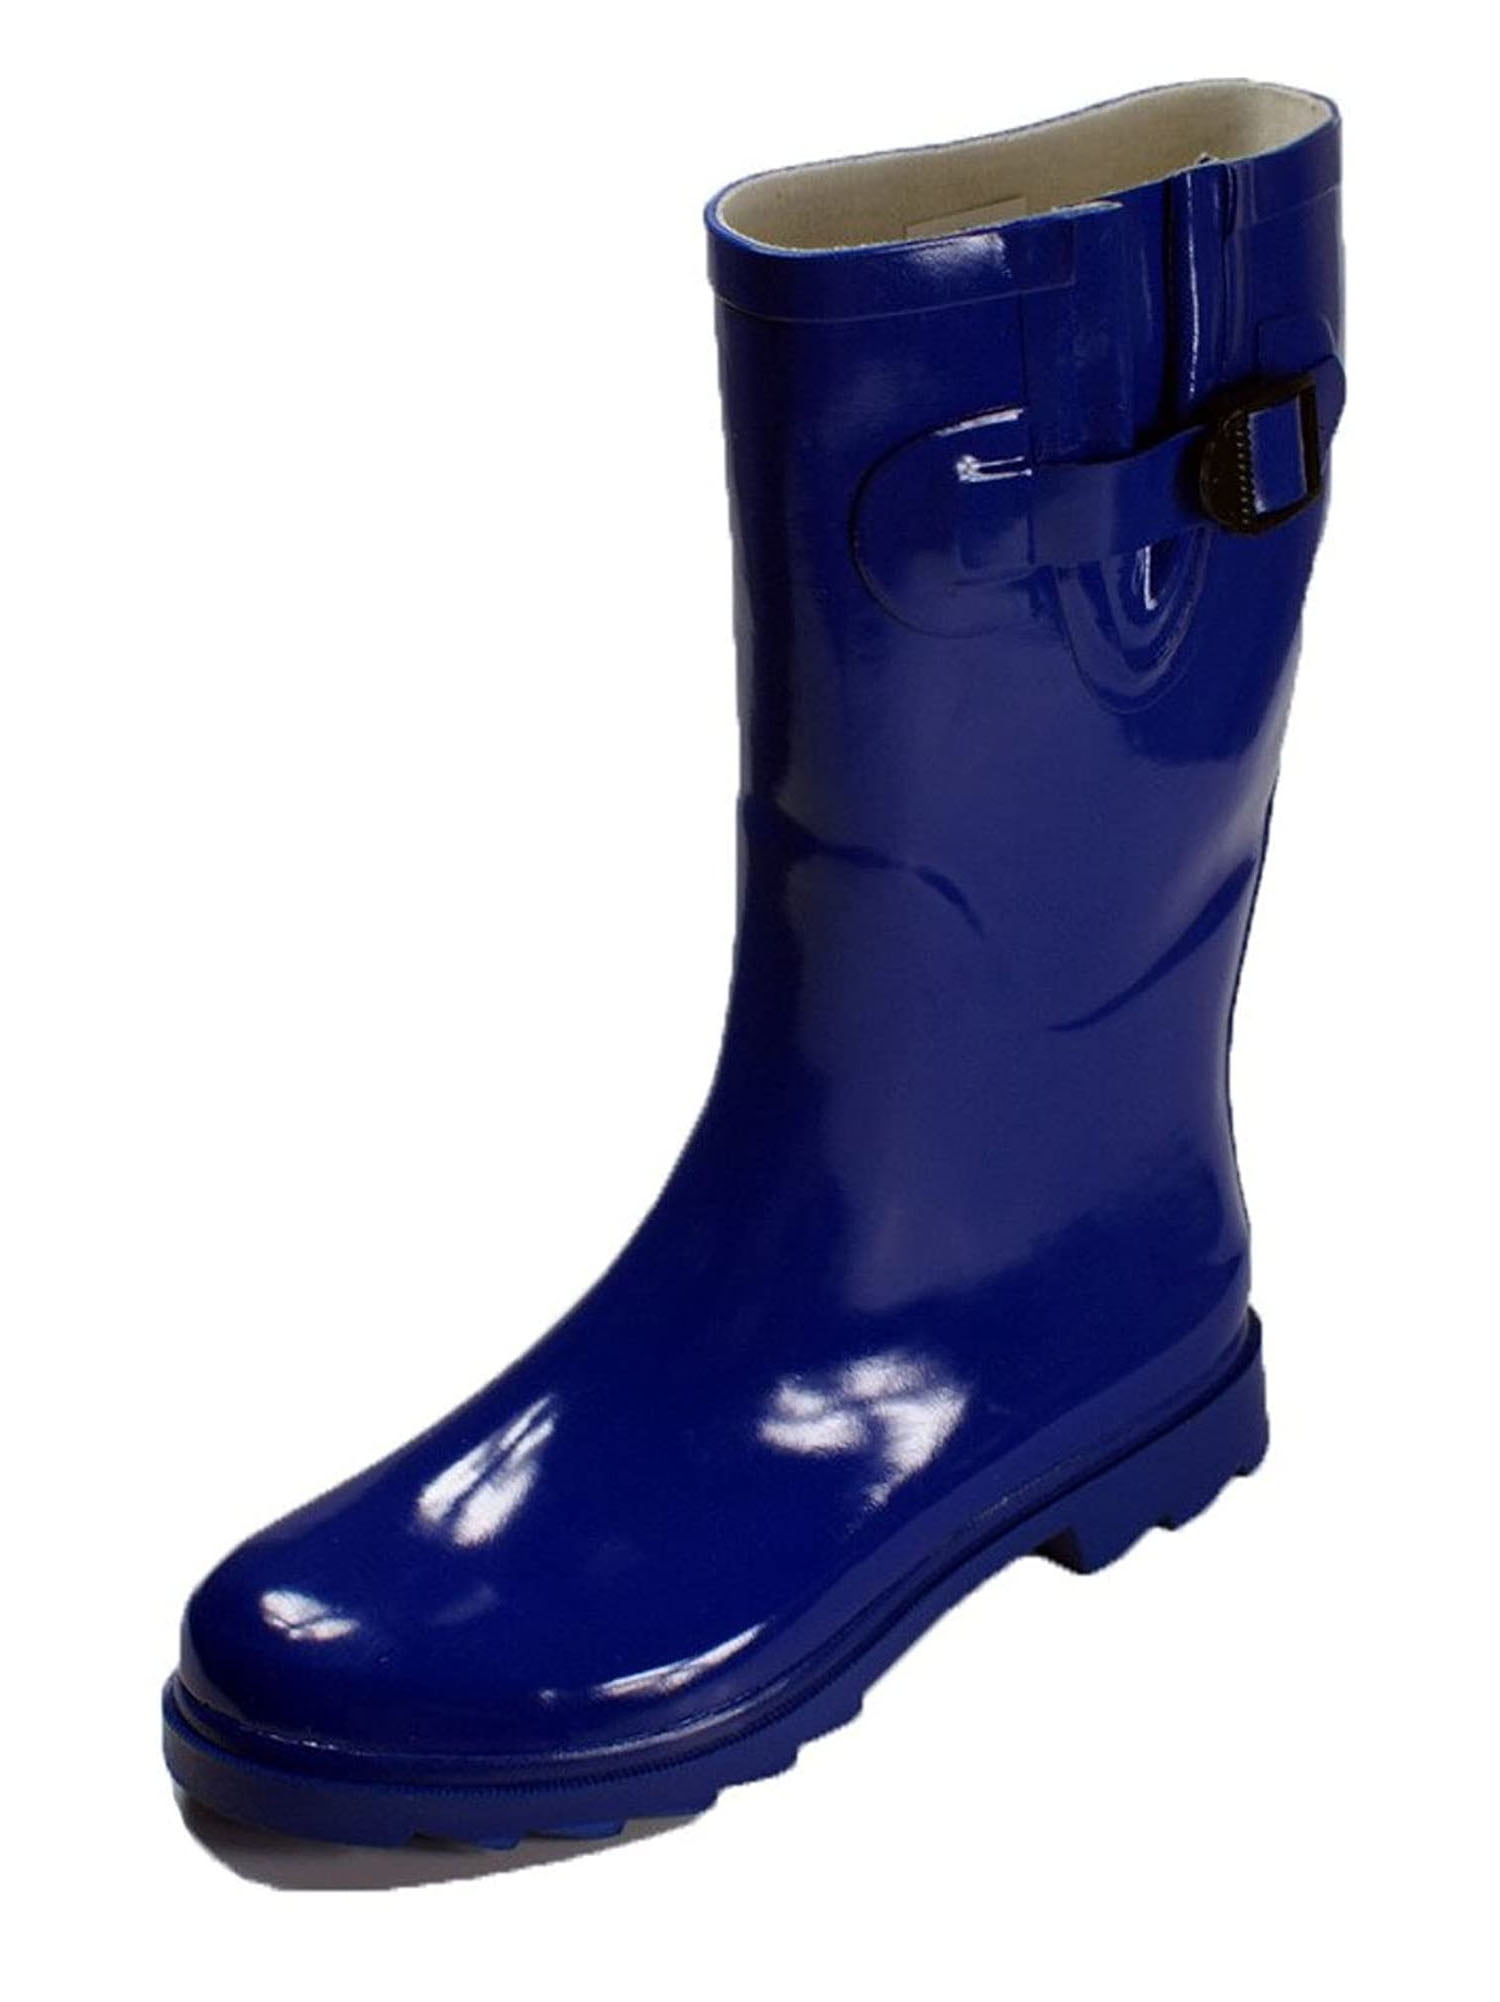 Tanleewa Non Slip Rubber Rain Boots for Women Waterproof Rain Garden ...